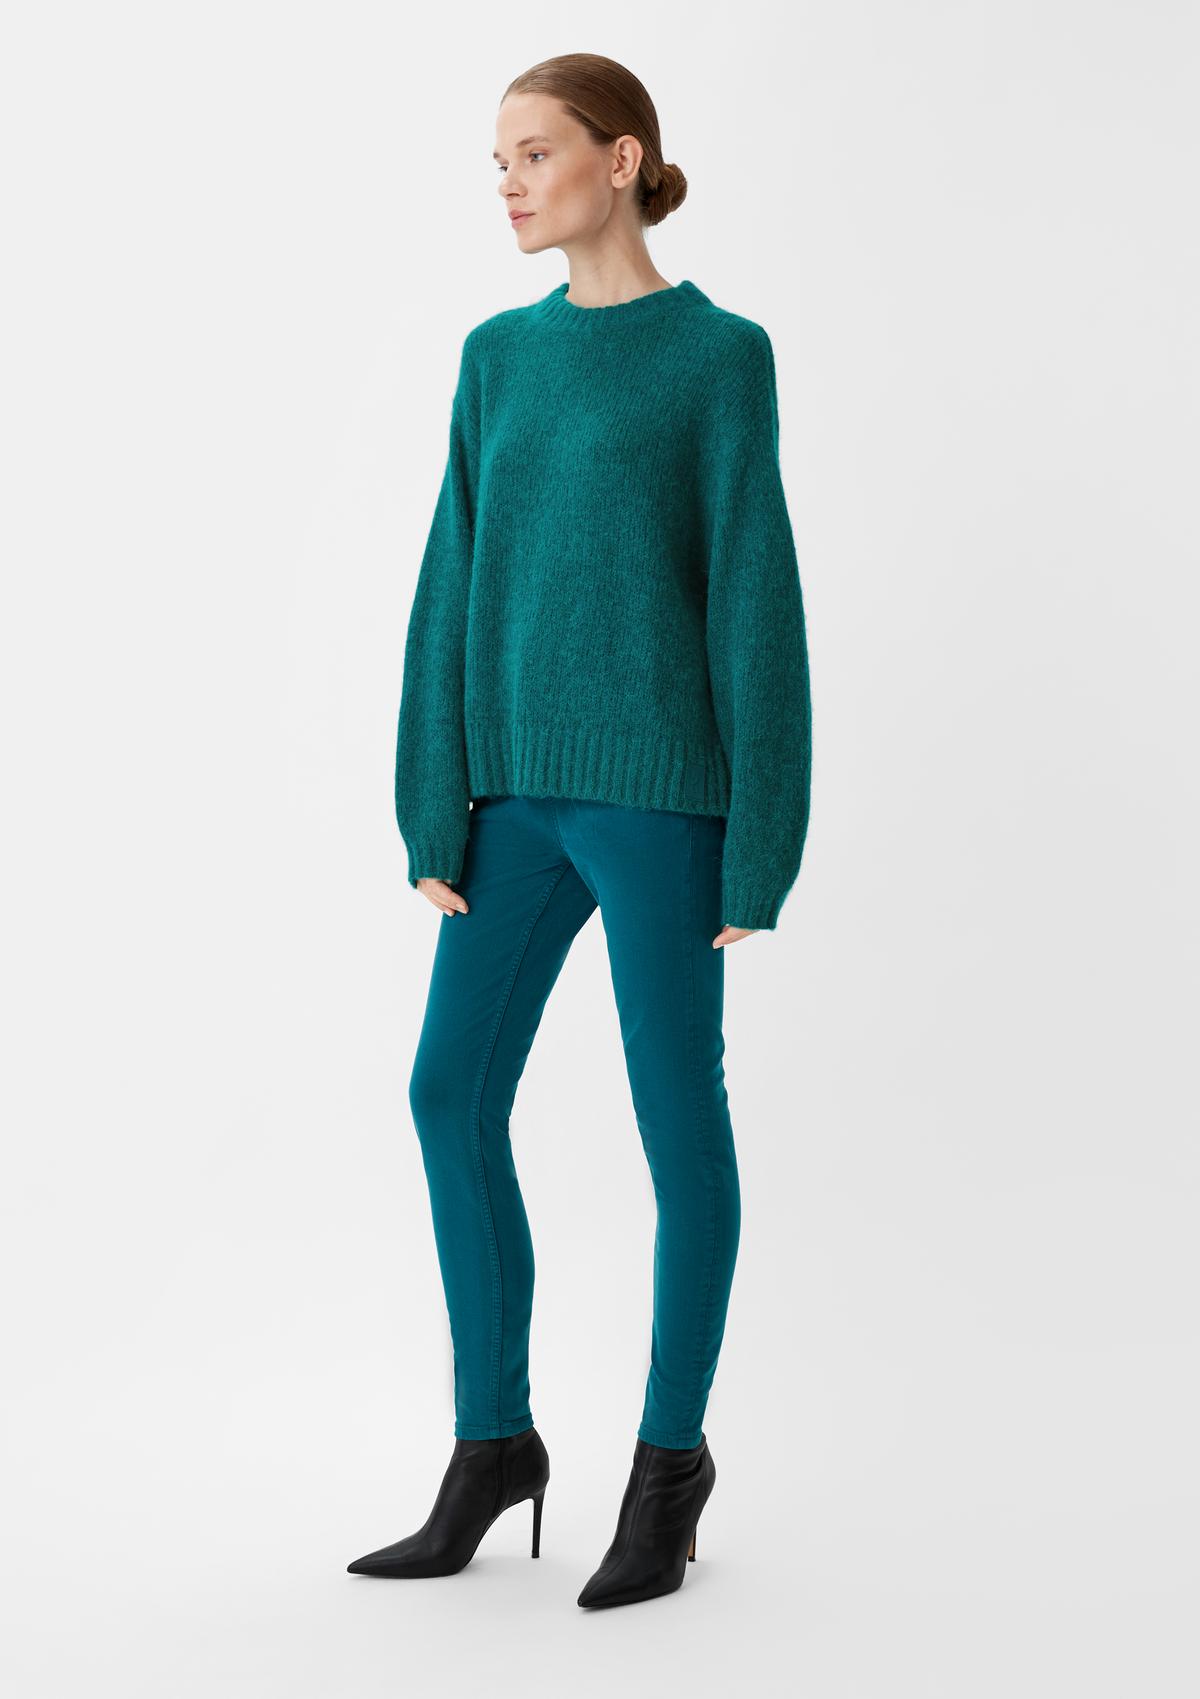 Knitted jumper in an alpaca blend